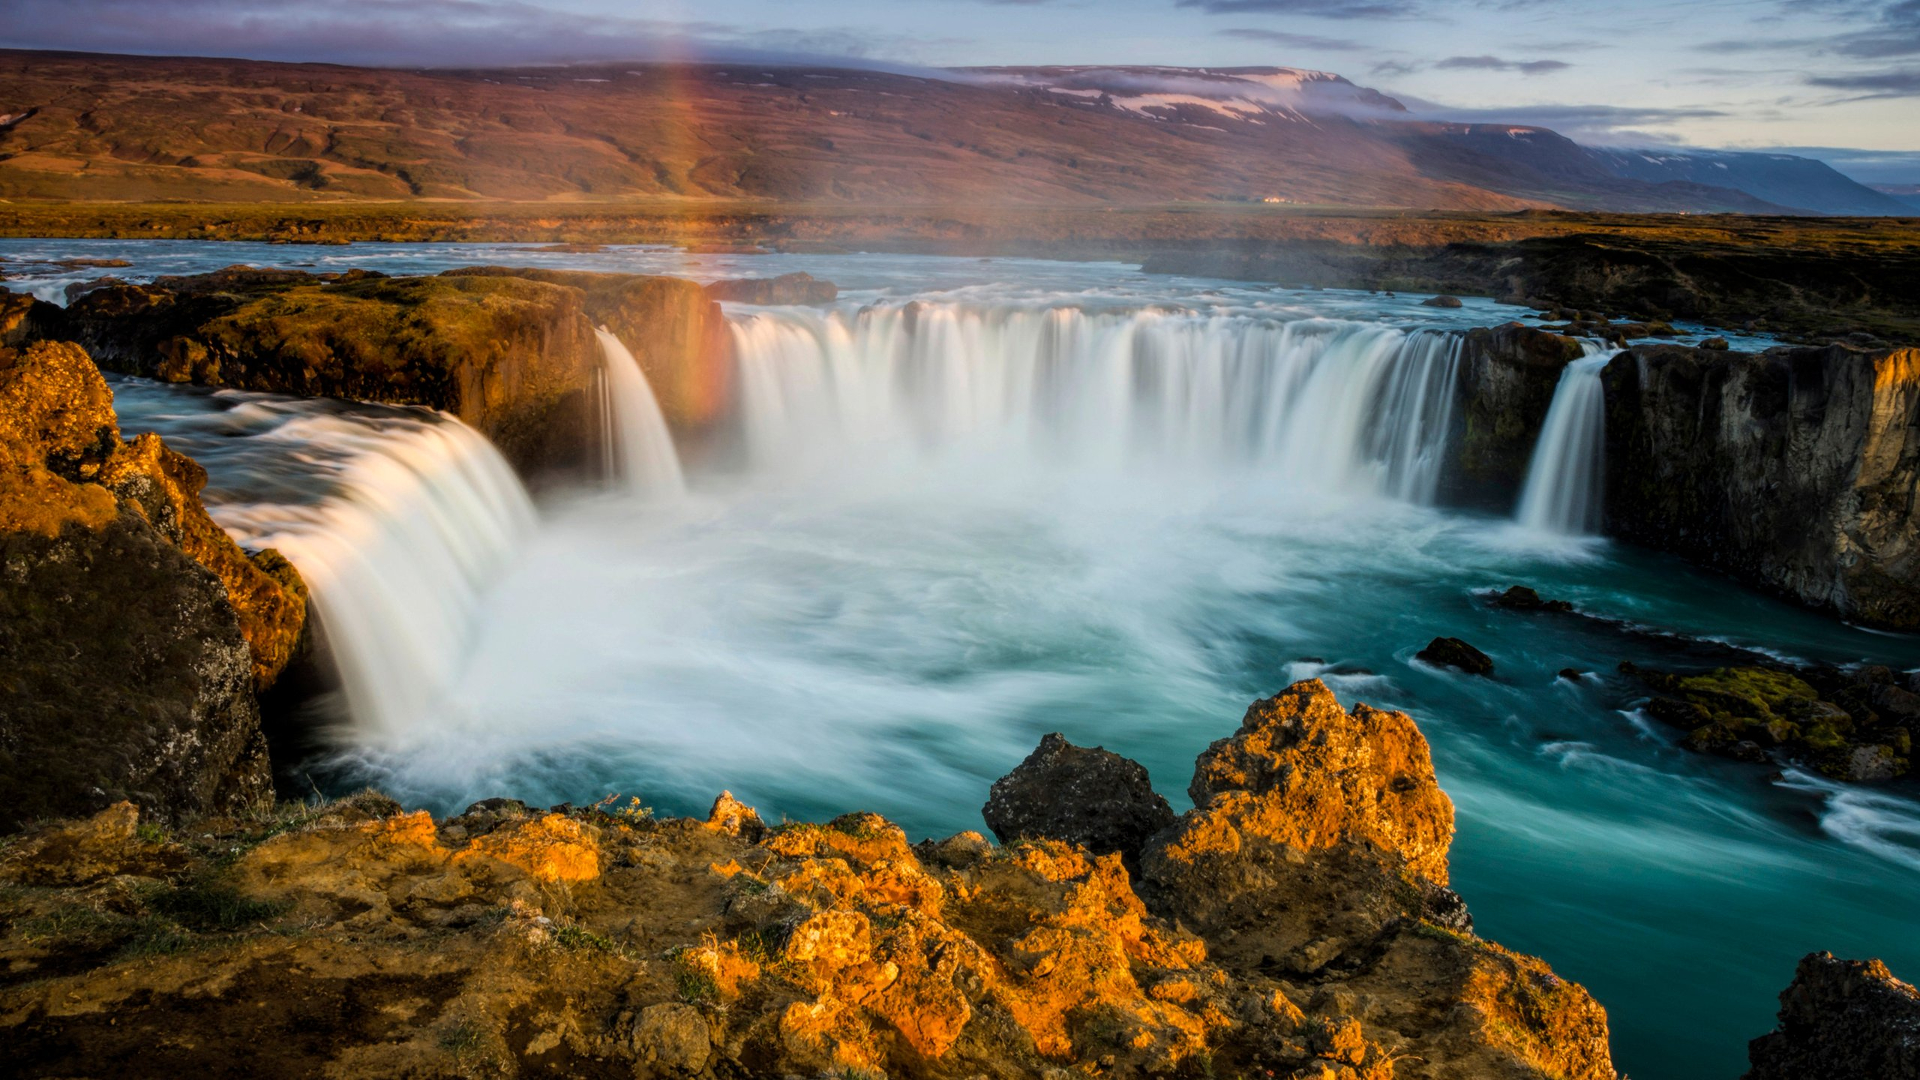 Godafoss Falls in Iceland by Dirk Bleyer